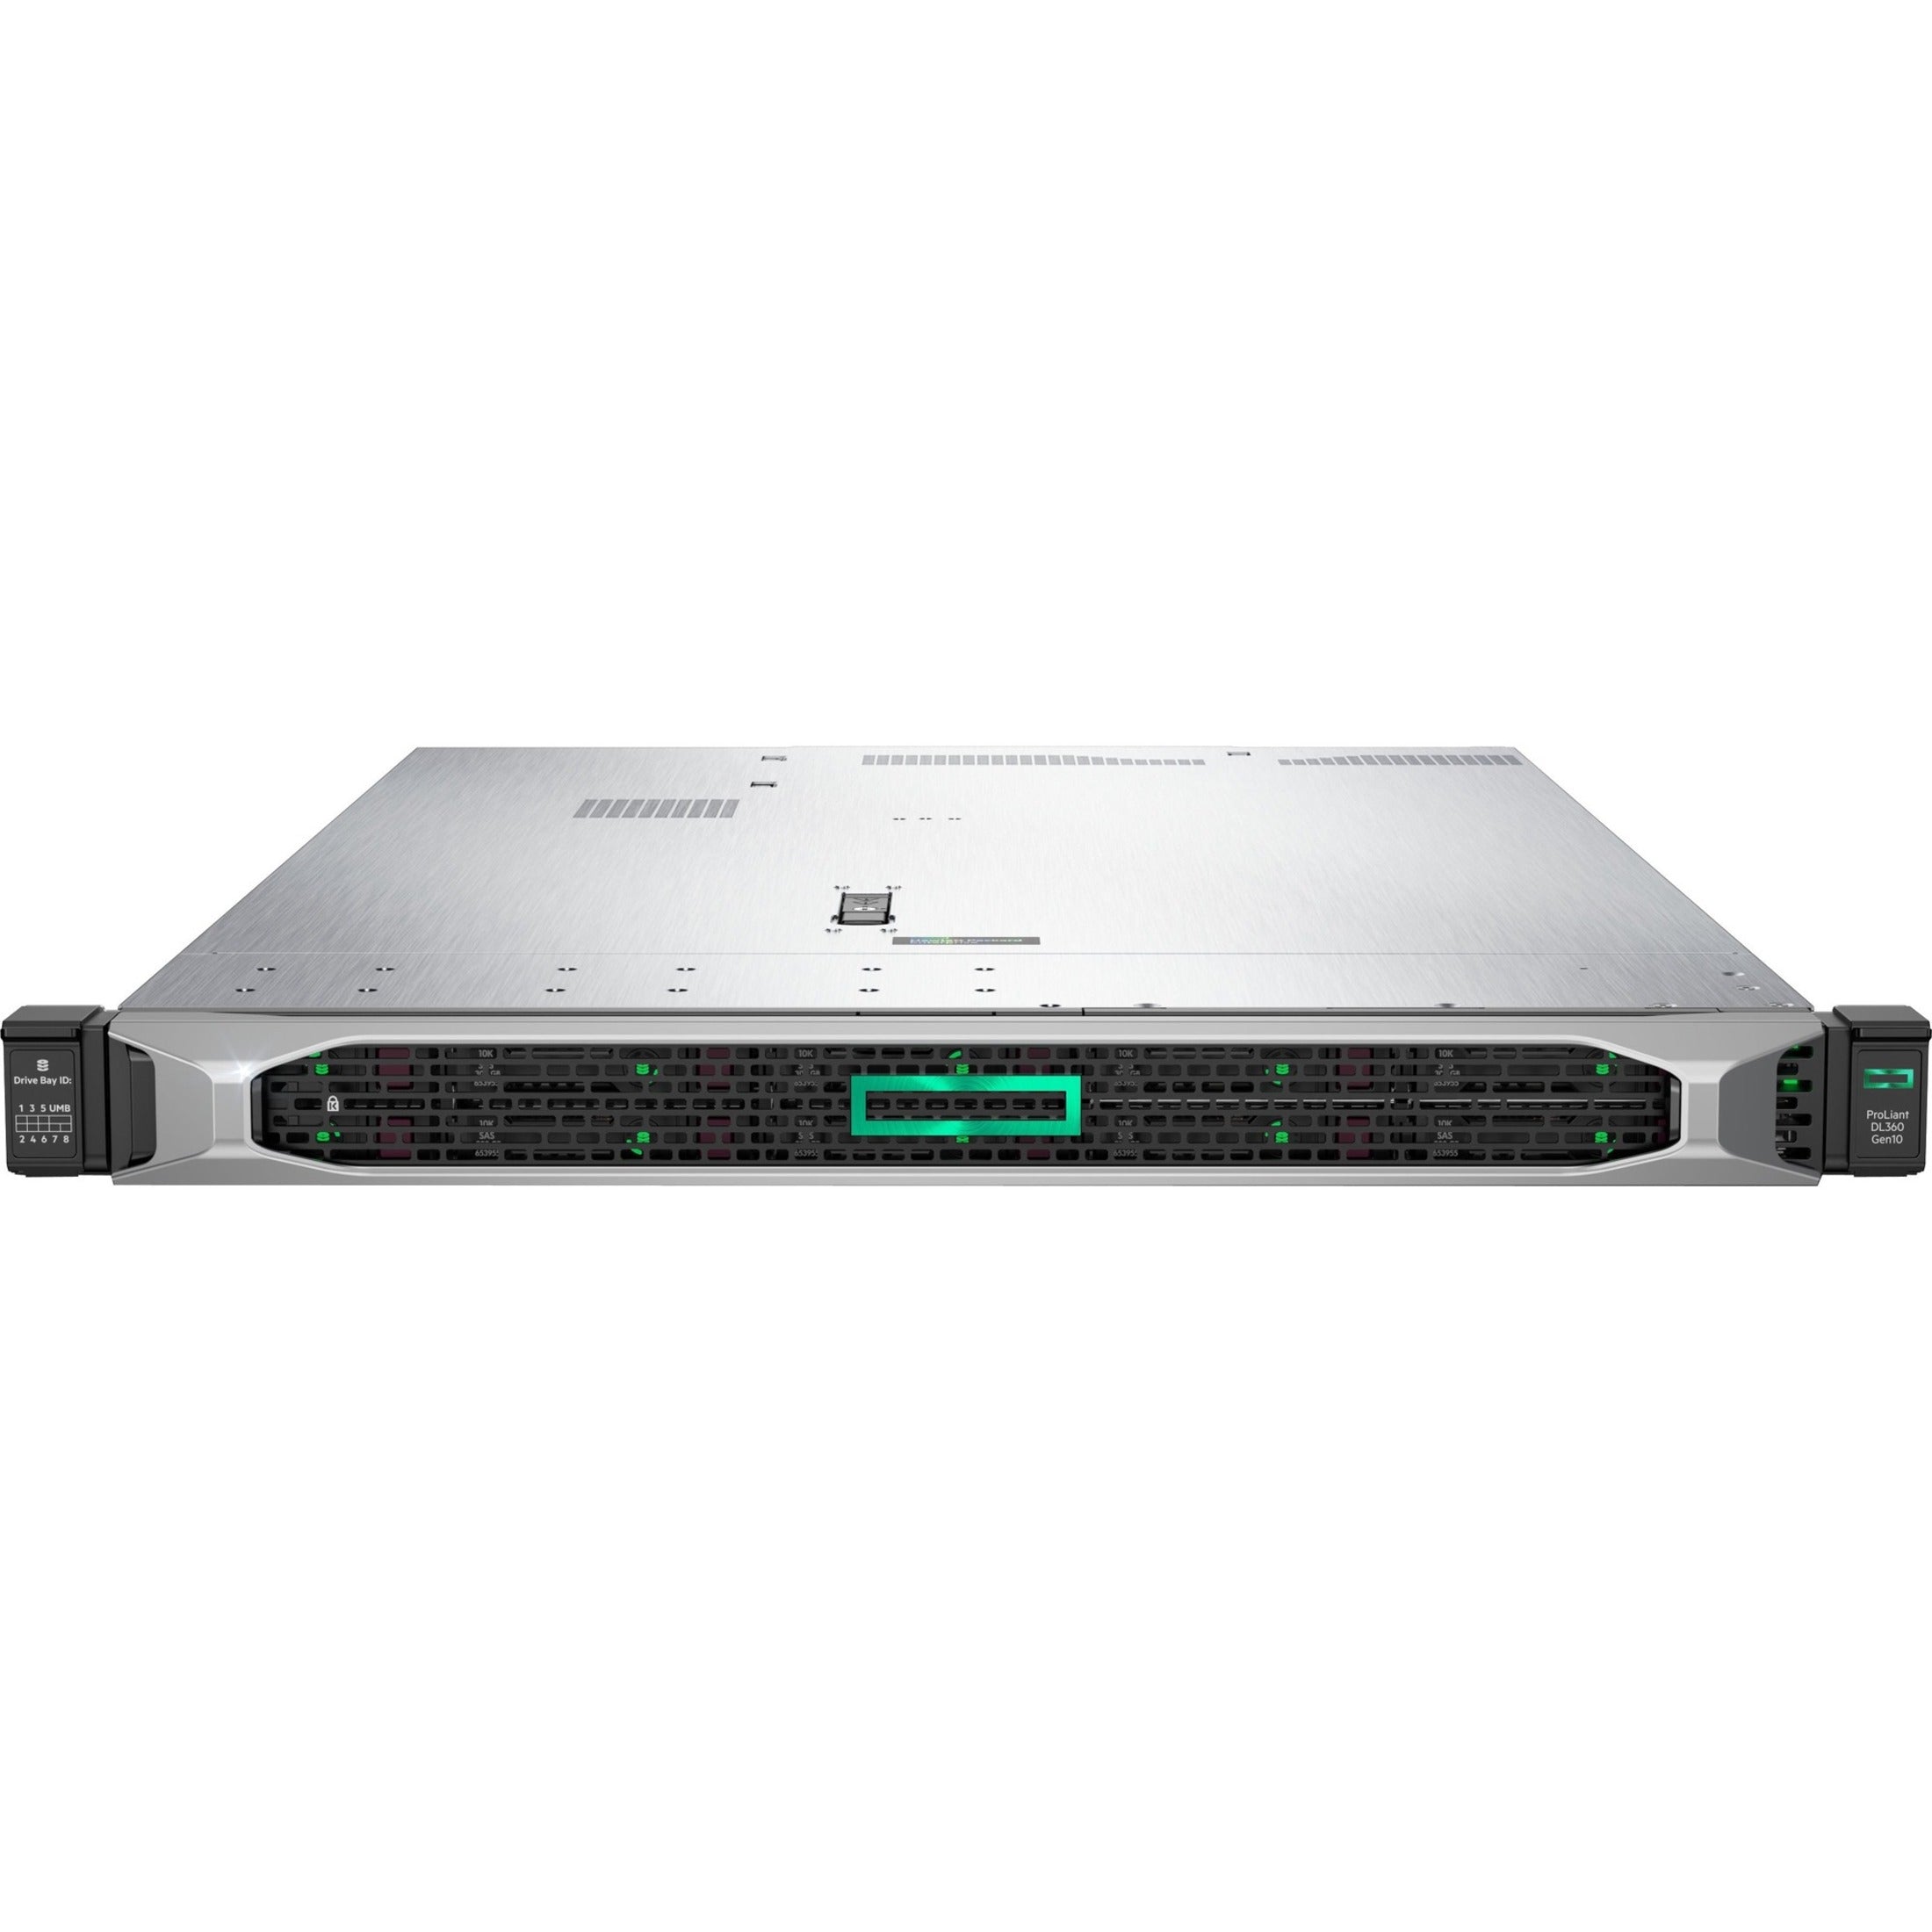 HPE E ProLiant DL360 G10 1U Rack Server - 1 x Intel Xeon Silver 4210R 2.40 GHz - 32 GB RAM - Serial ATA, 12Gb/s SAS Controller (P56956-B21) [Discontinued]